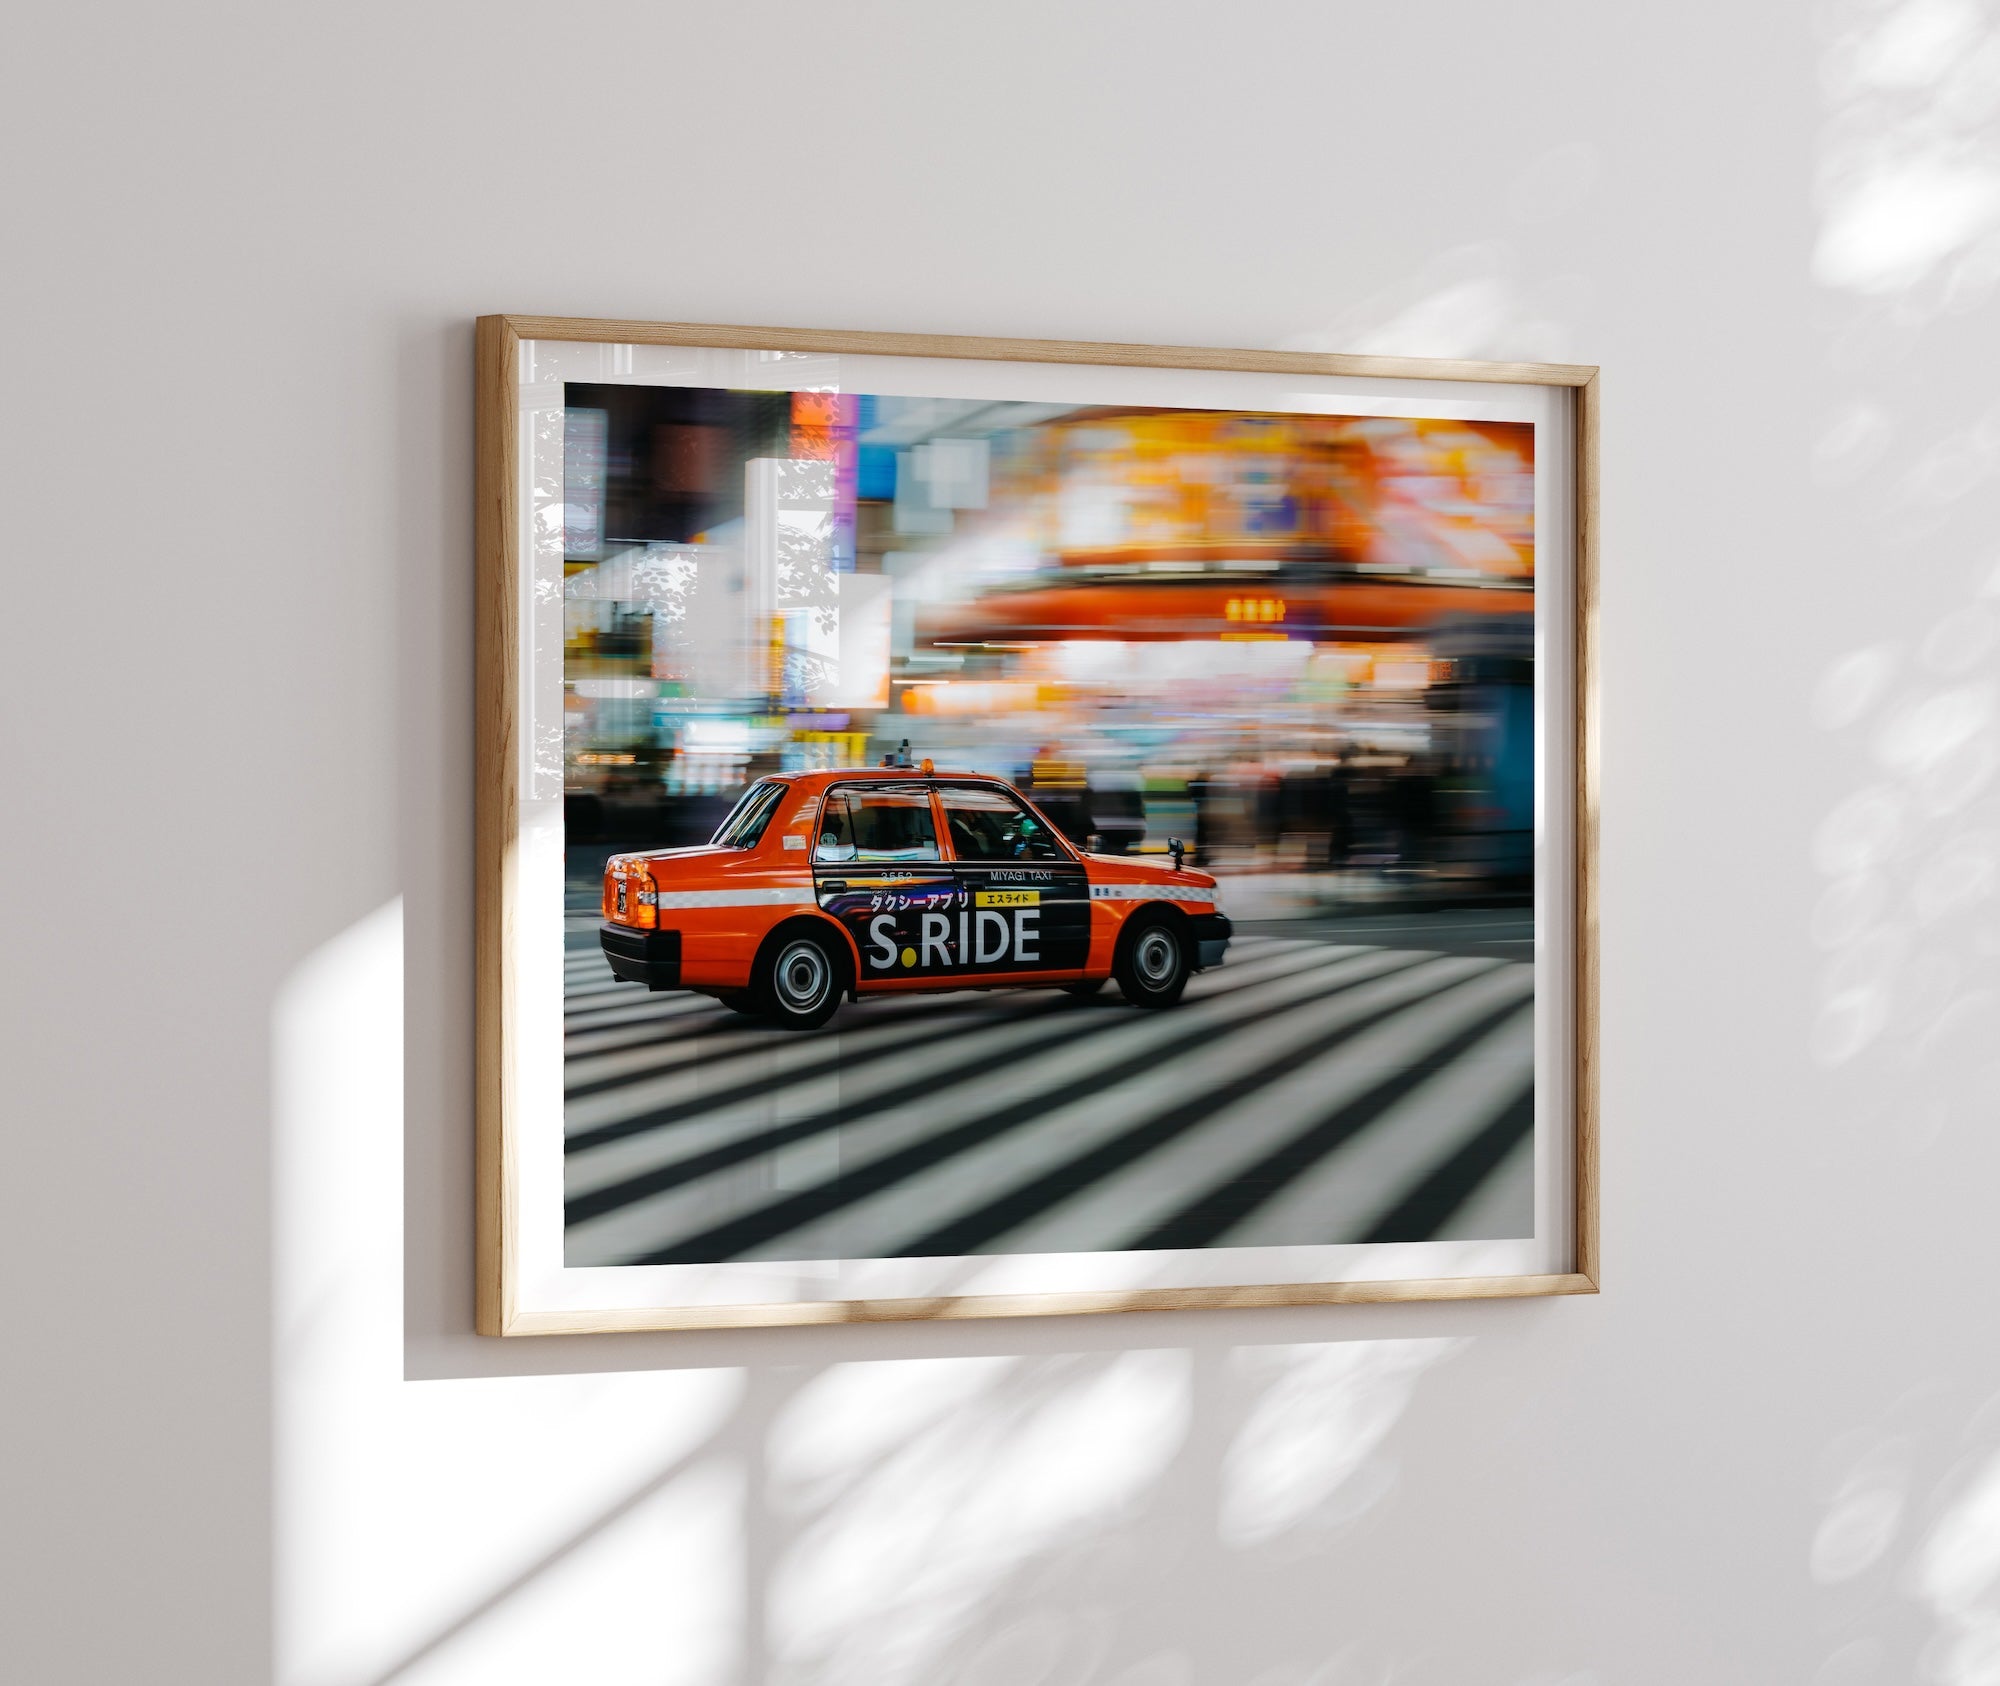 Speeding orange taxi in Shinjuku - Peter Yan Studio